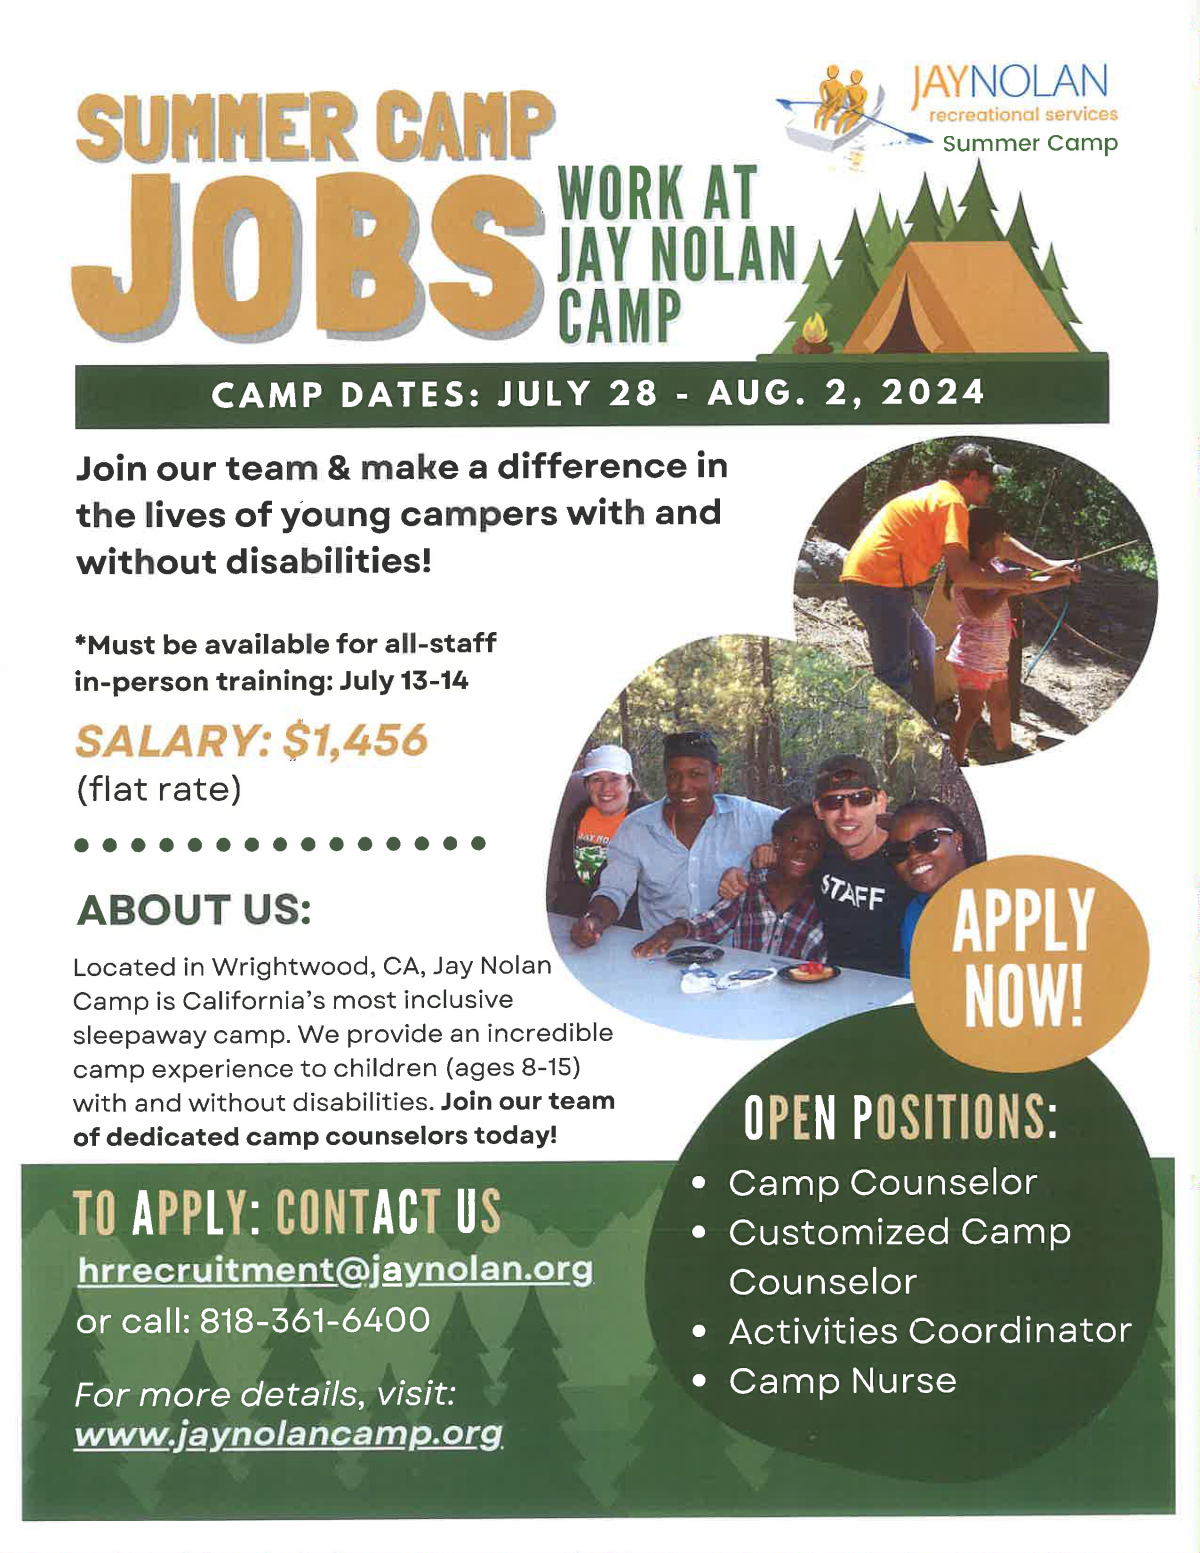 Summer Camp Jobs - Work at Jay Nolan Camp!